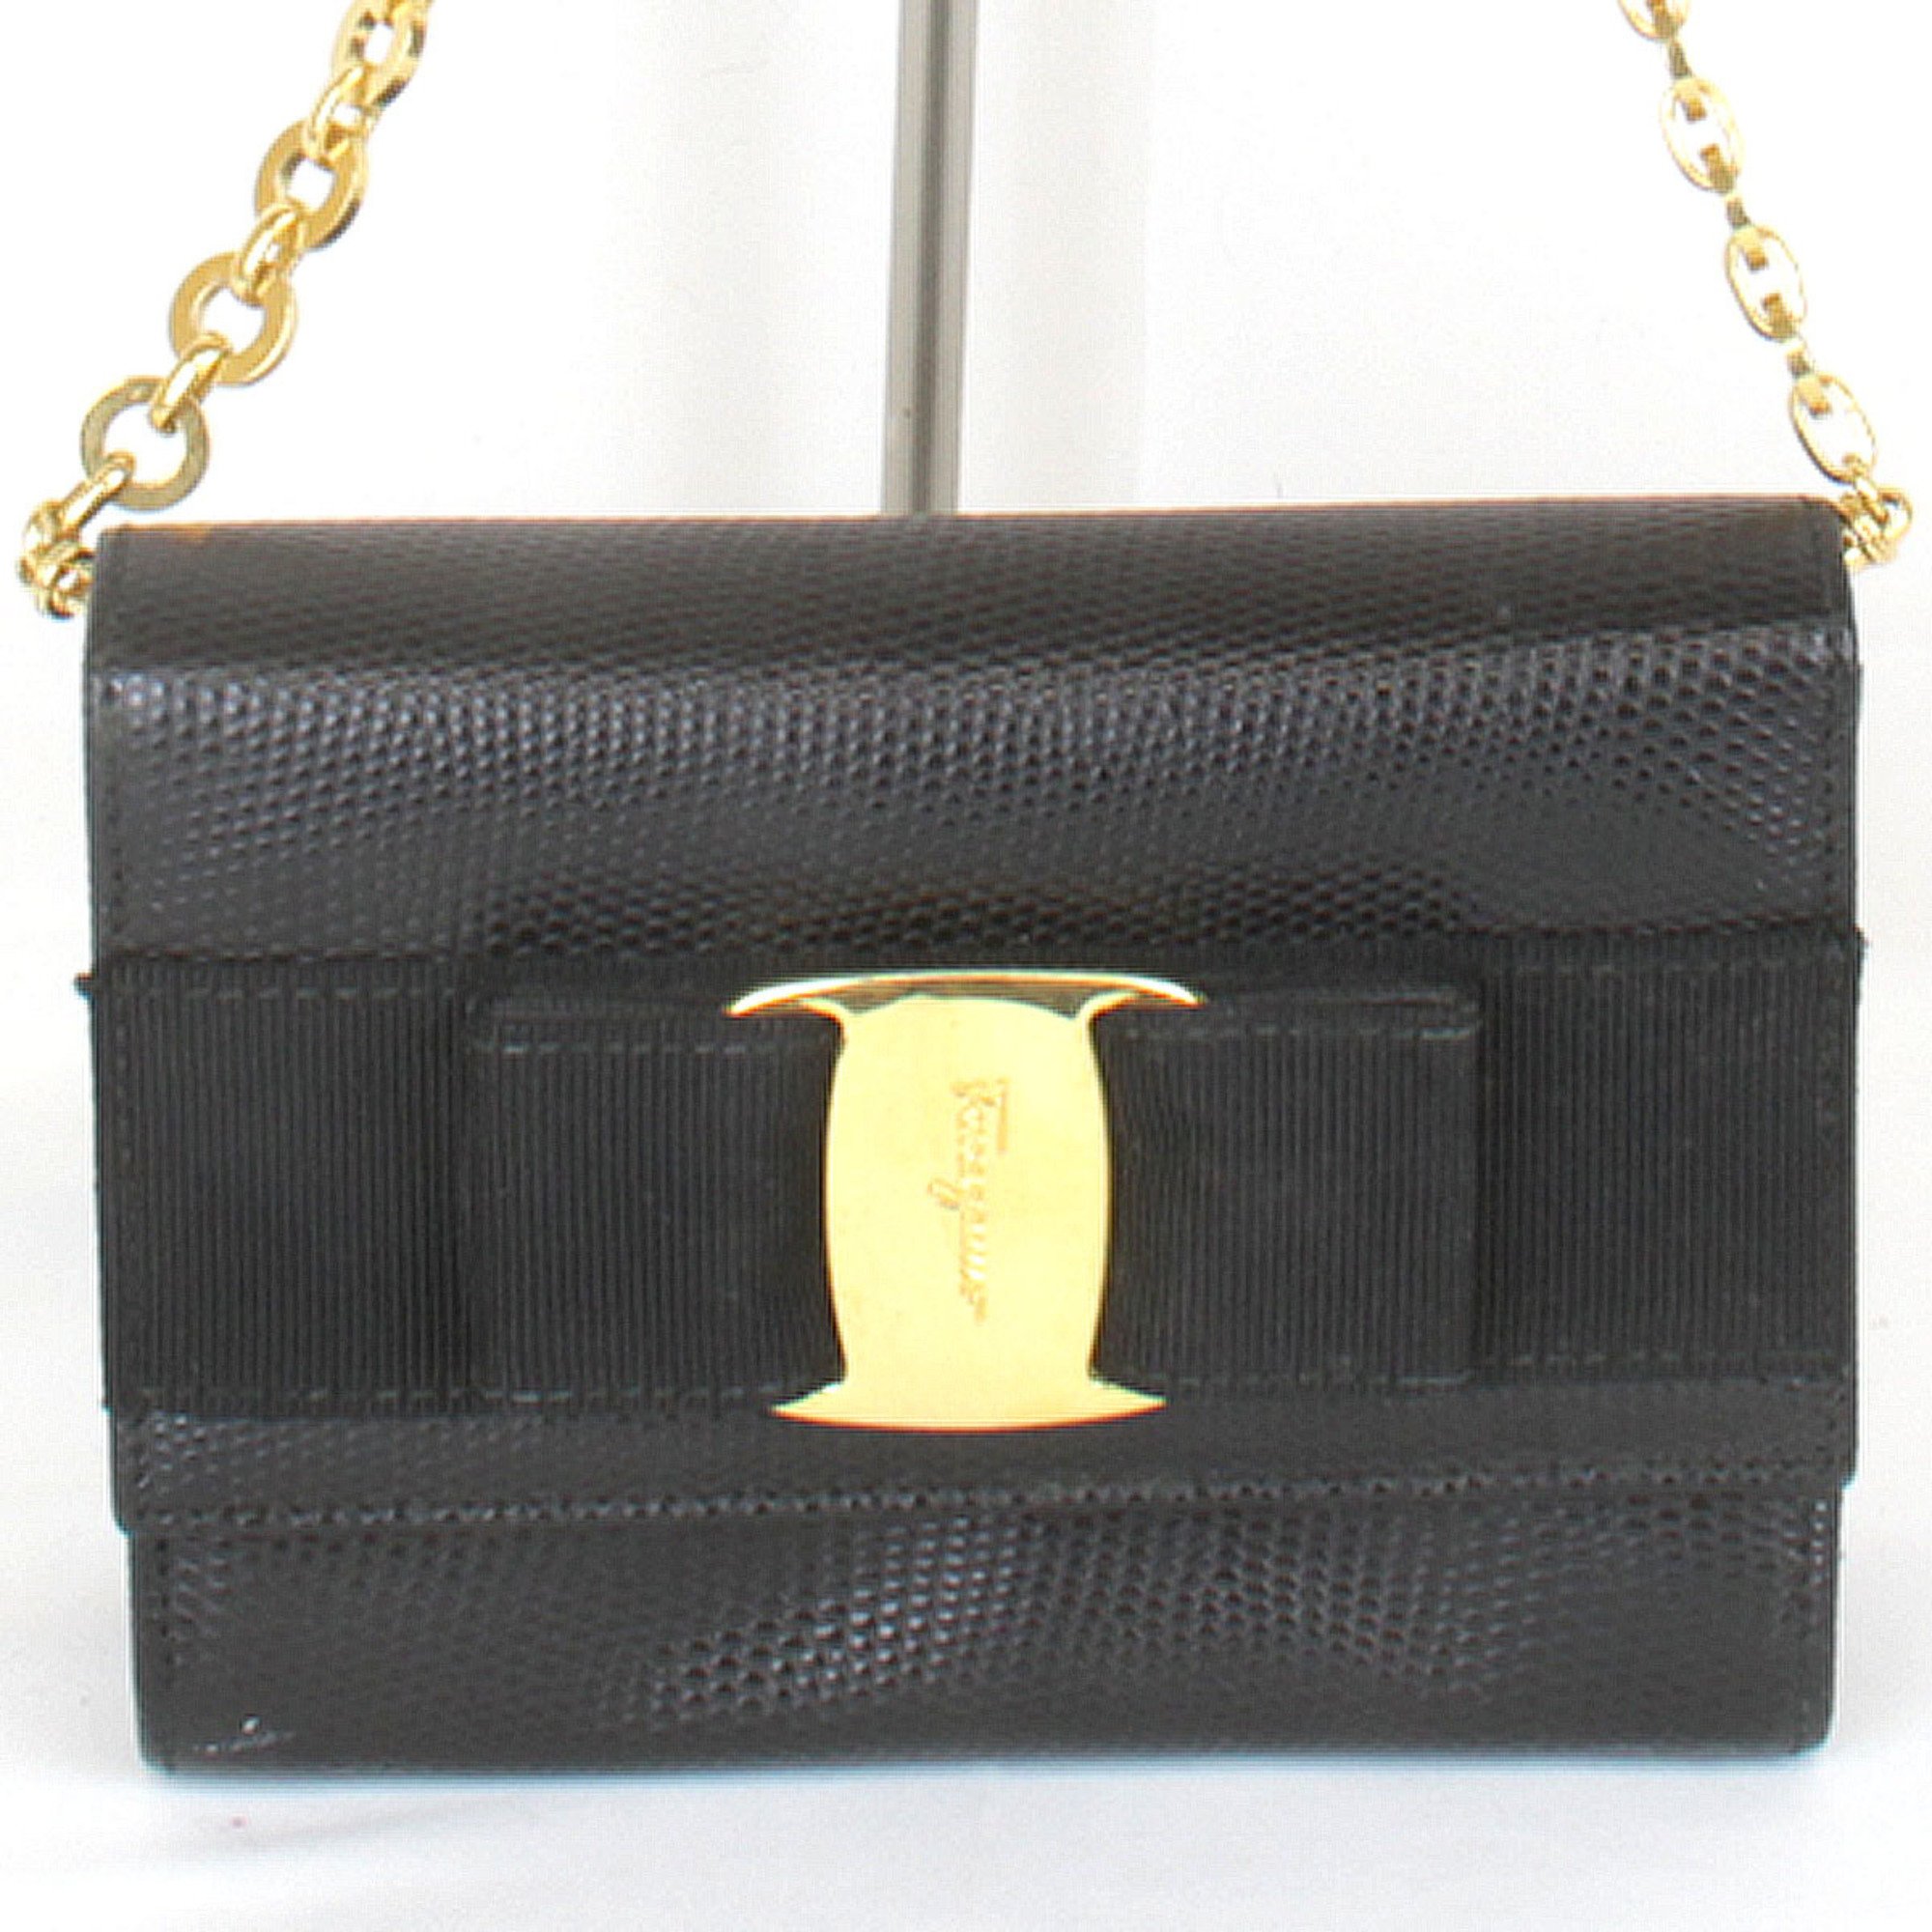 Salvatore Ferragamo Vara Chain Shoulder Bag Leather Black Women's